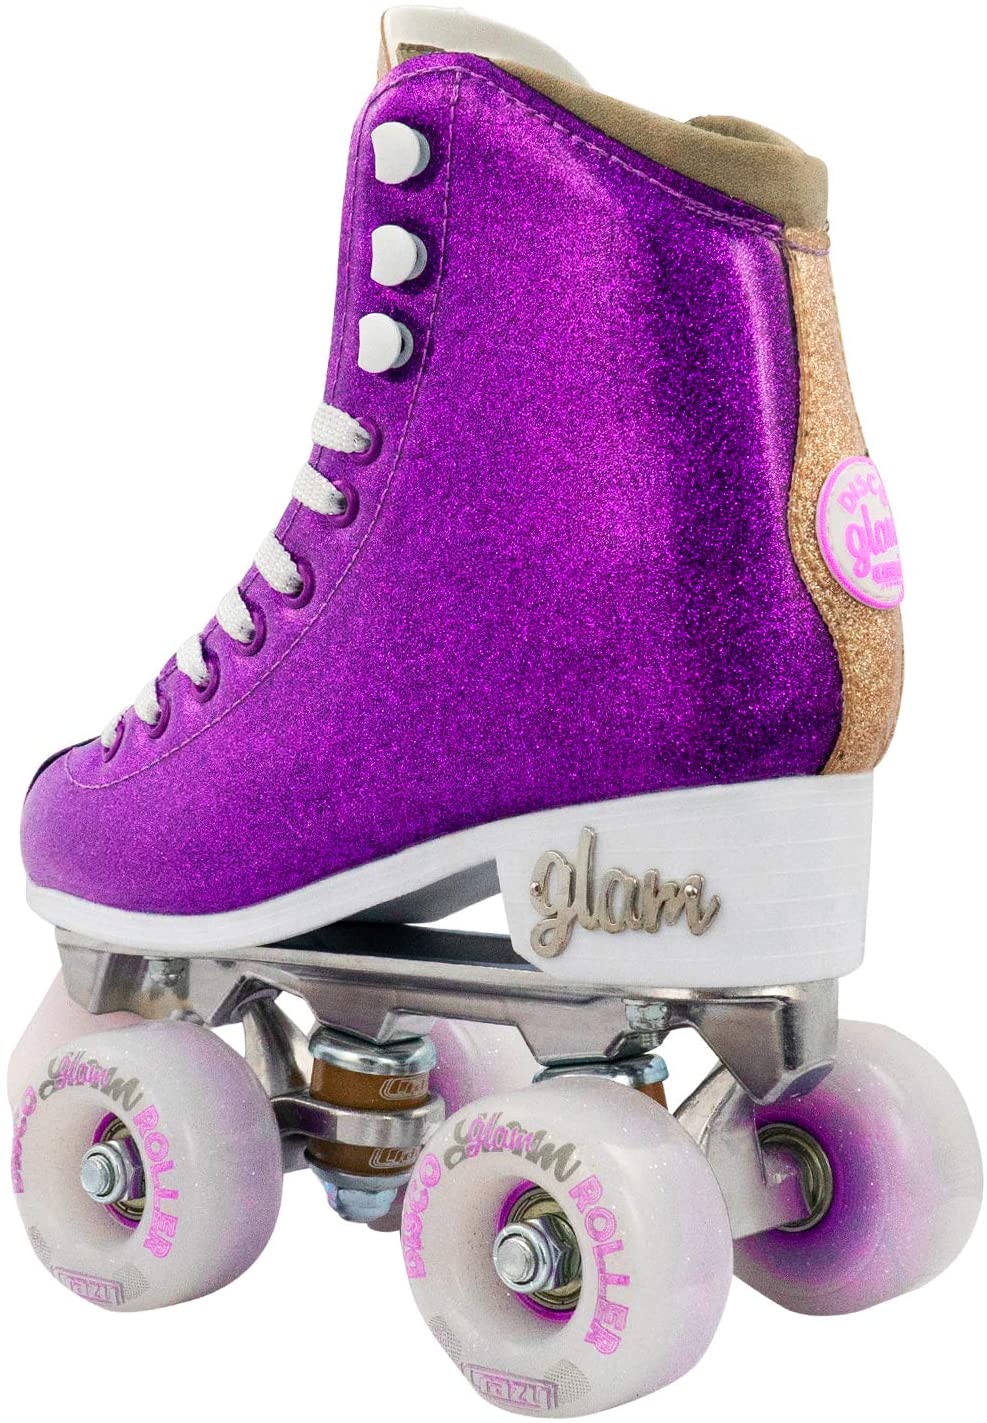 UK – 8, 10, 12, 14 BTFL Skates for Ladies and Girls/Disco Roller/Roller Skates Trends Coco